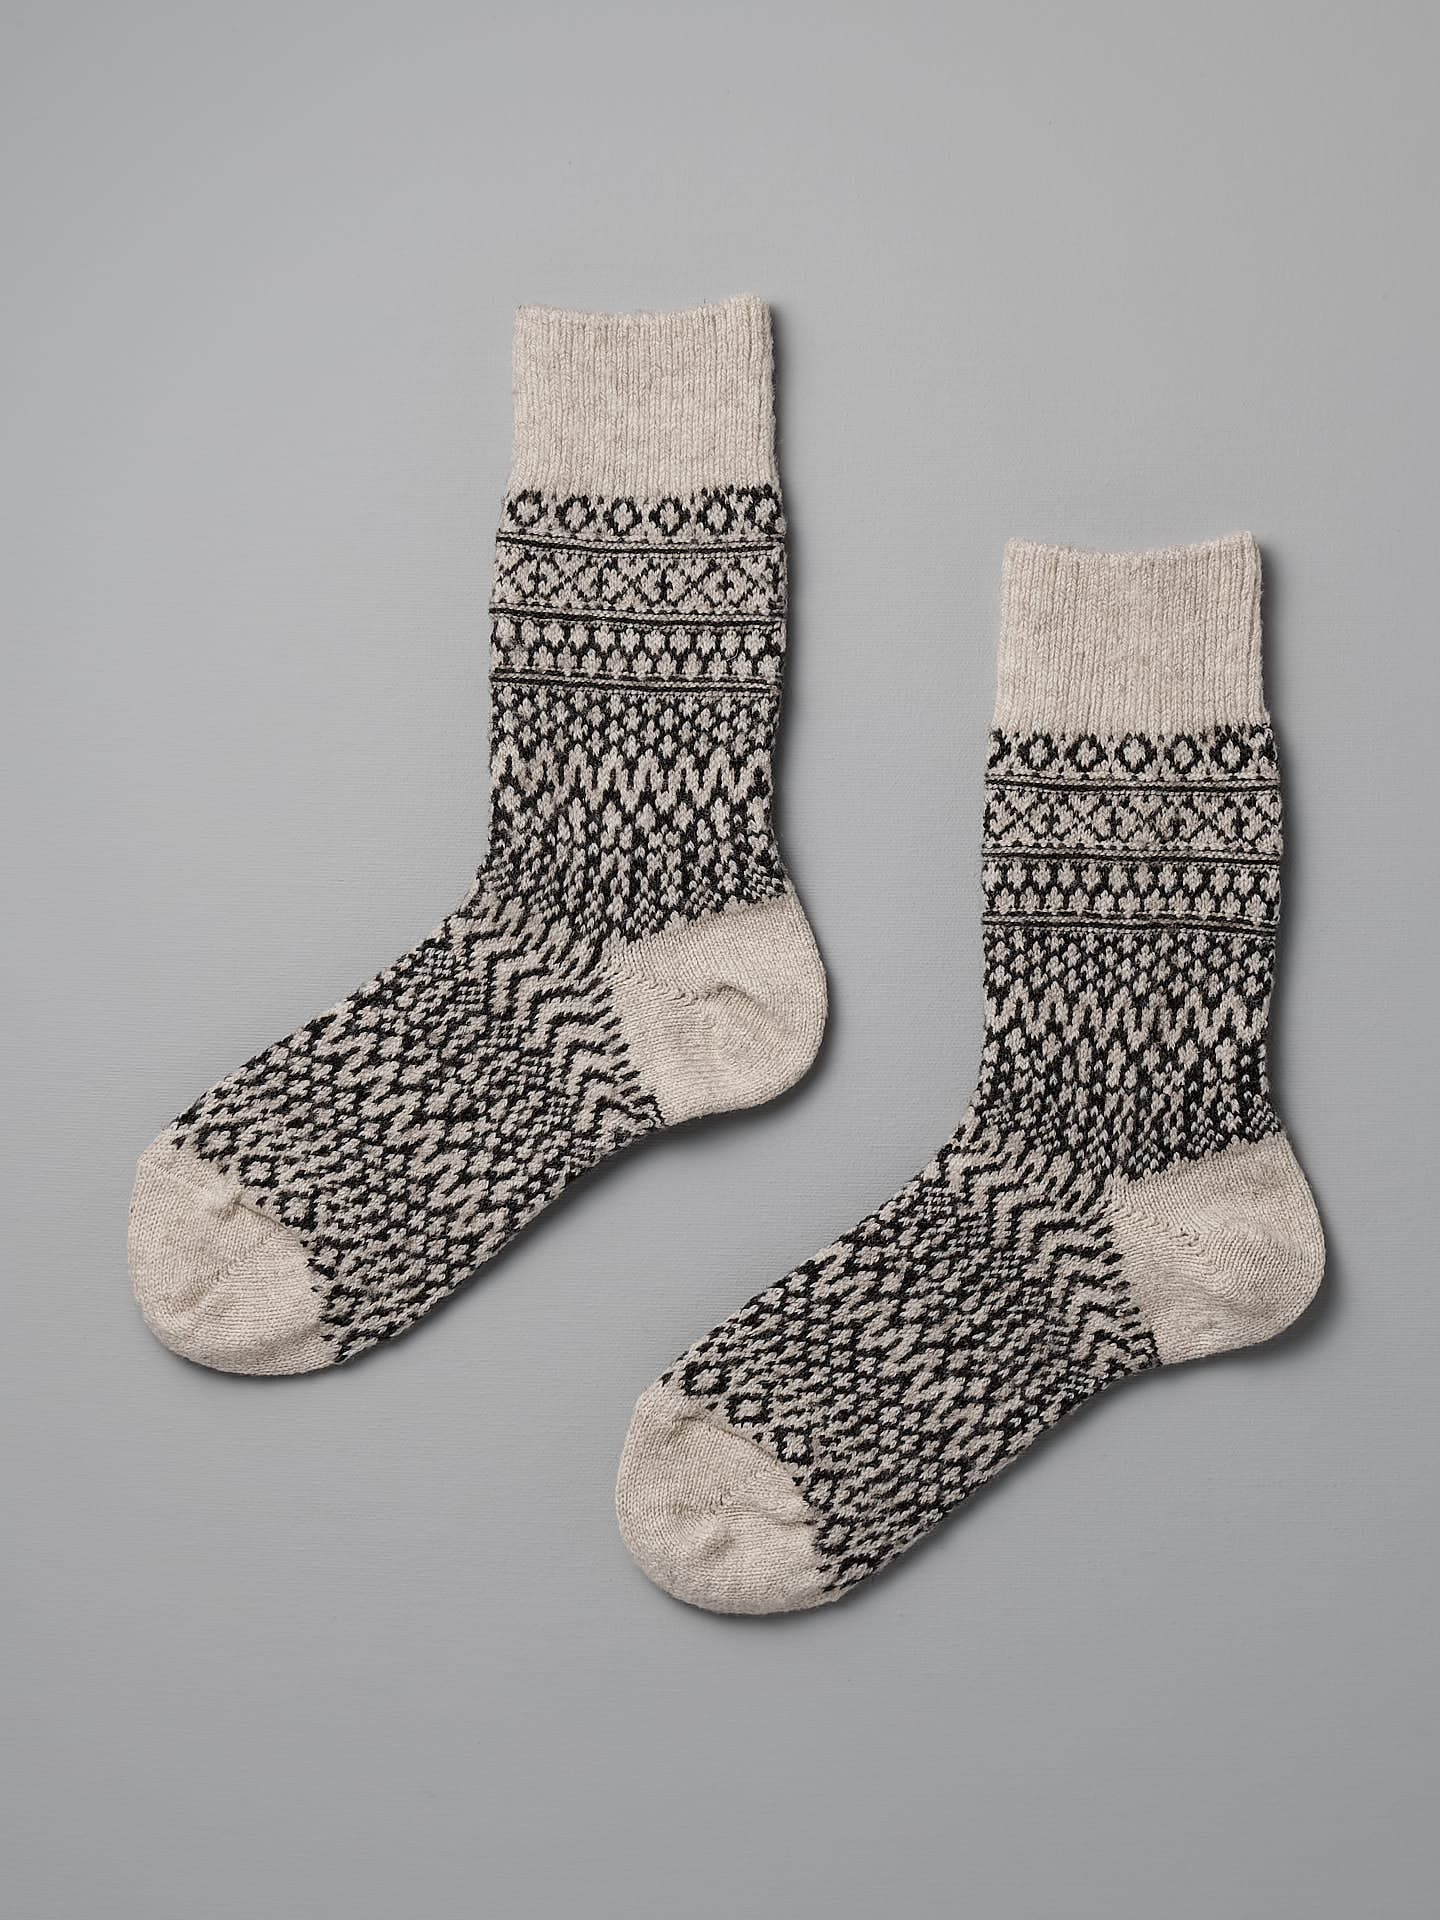 A pair of Nishiguchi Kutsushita Oslo Wool Jacquard Socks – Oatmeal, sized for EUR or US Men's & Women's, laid flat on a gray surface.